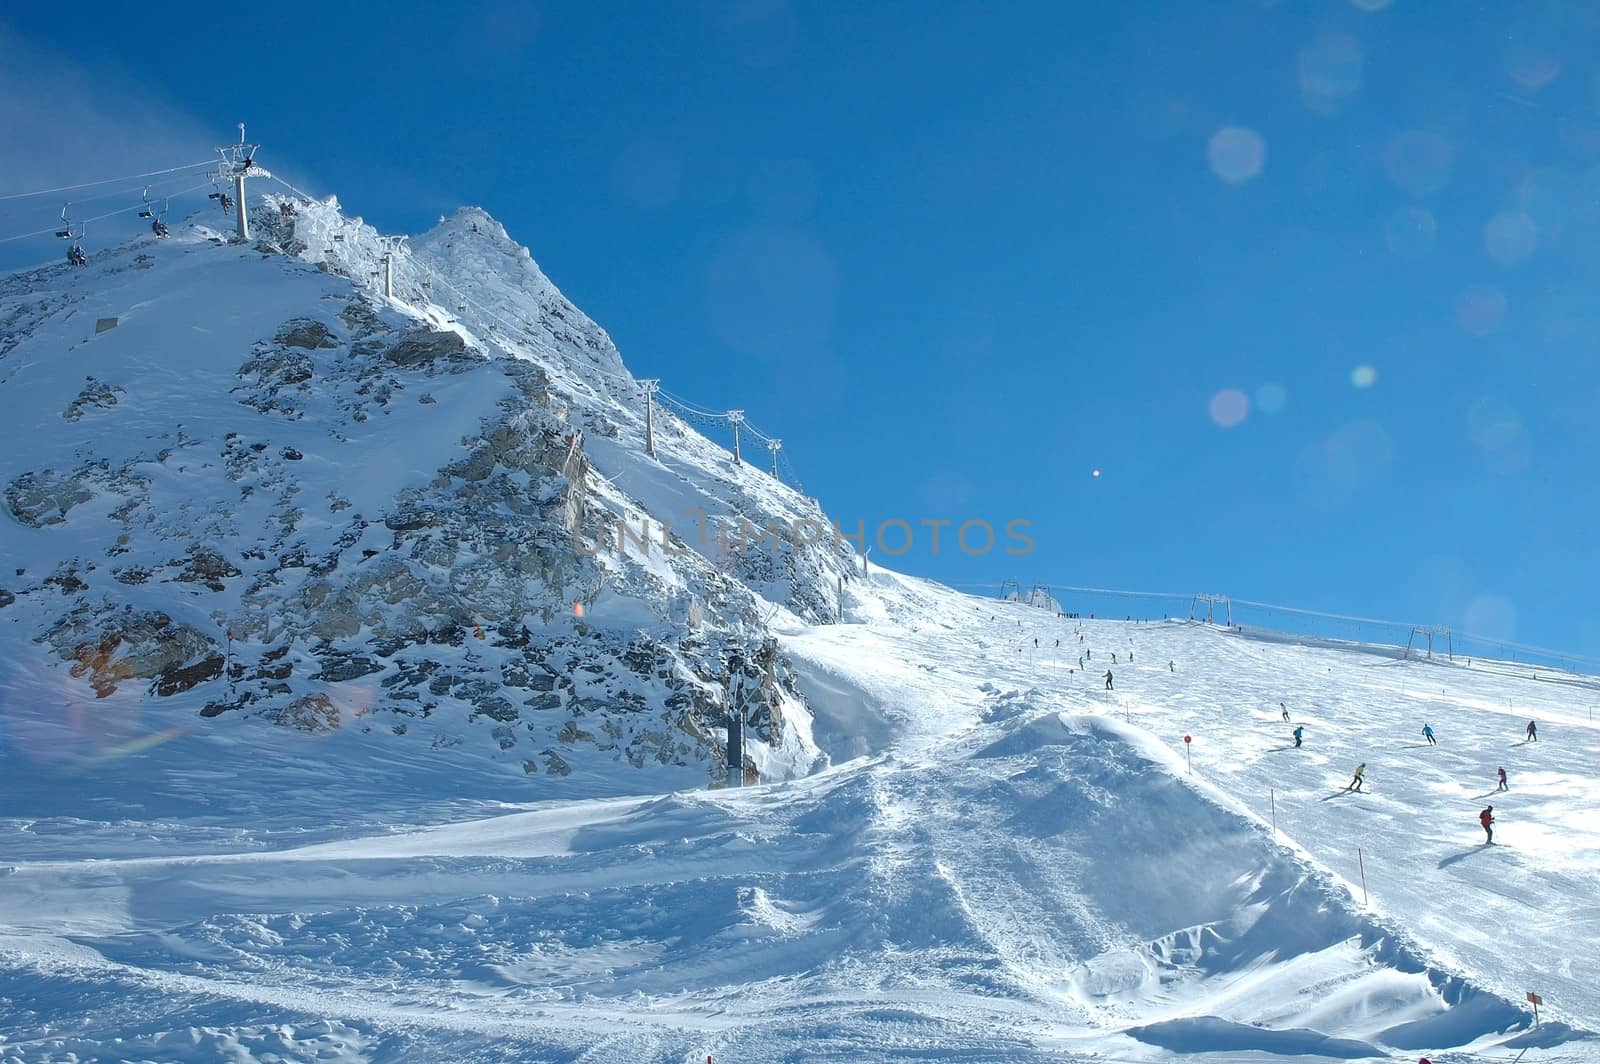 Ski slope and lift on Hintertux glacier by janhetman